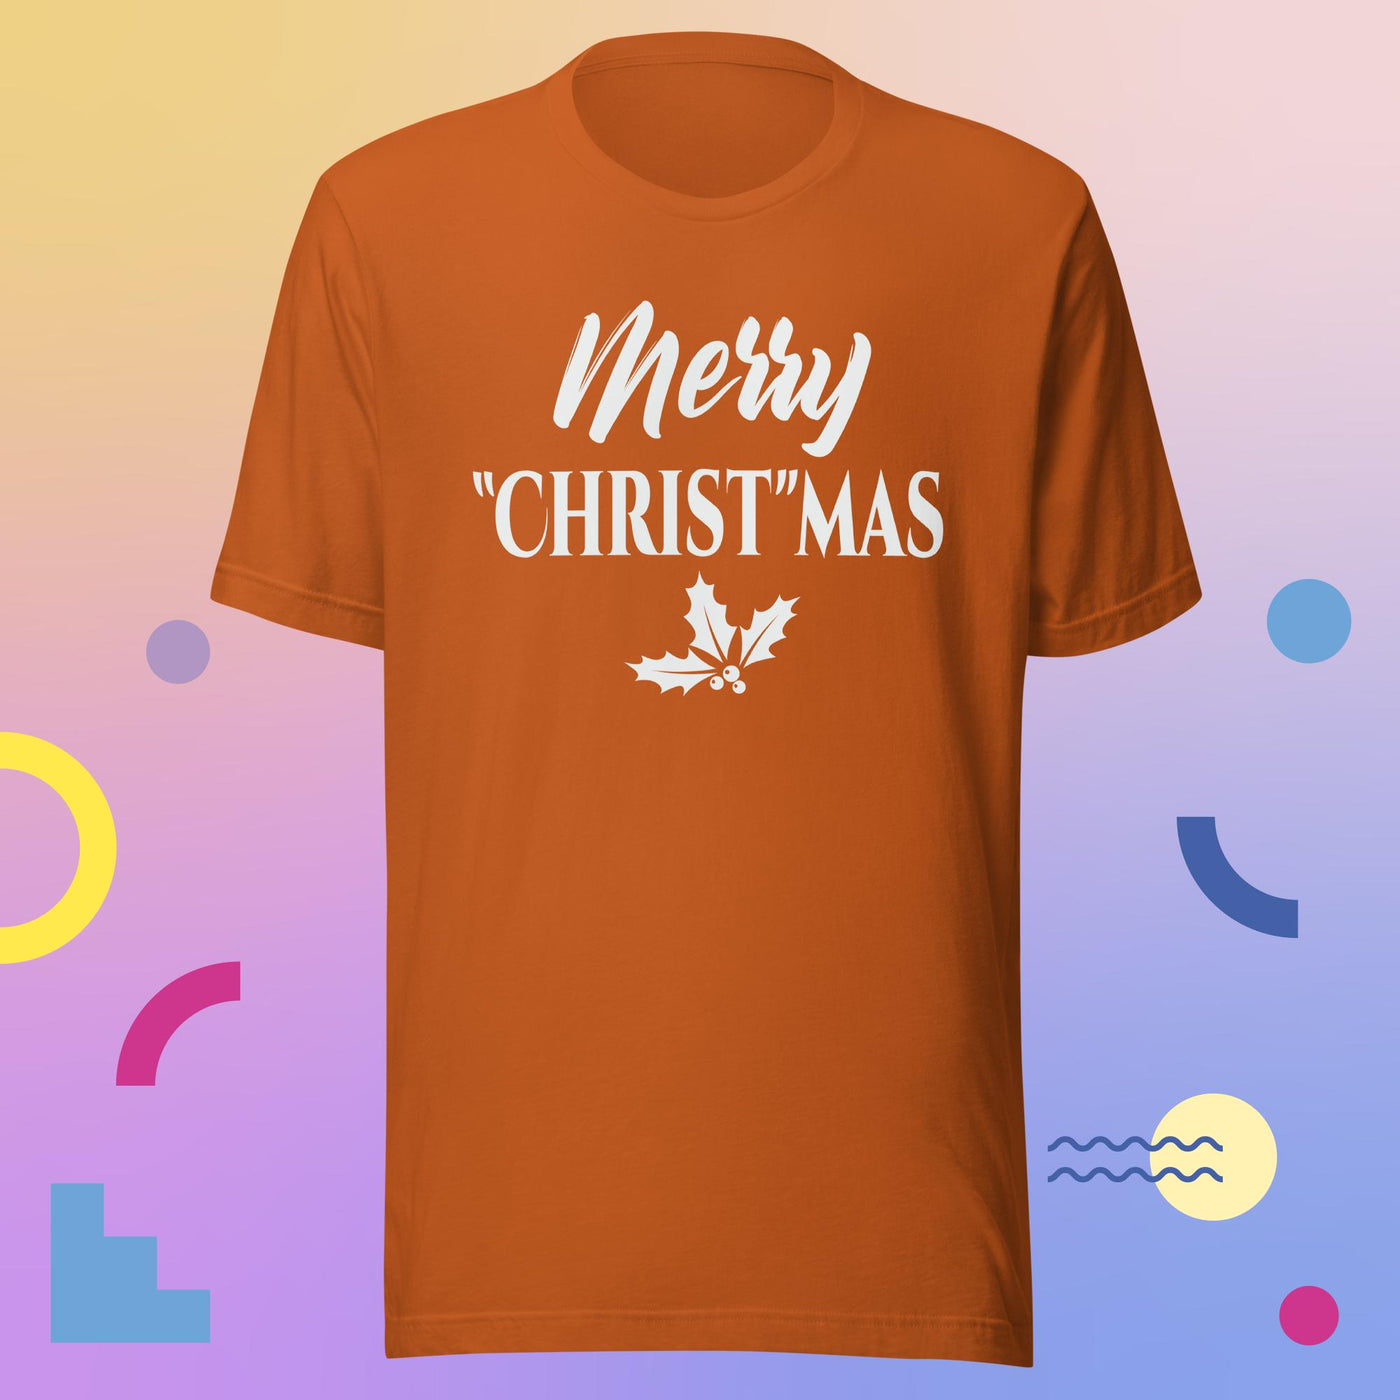 F&H Merry "Christ"mas t-shirt